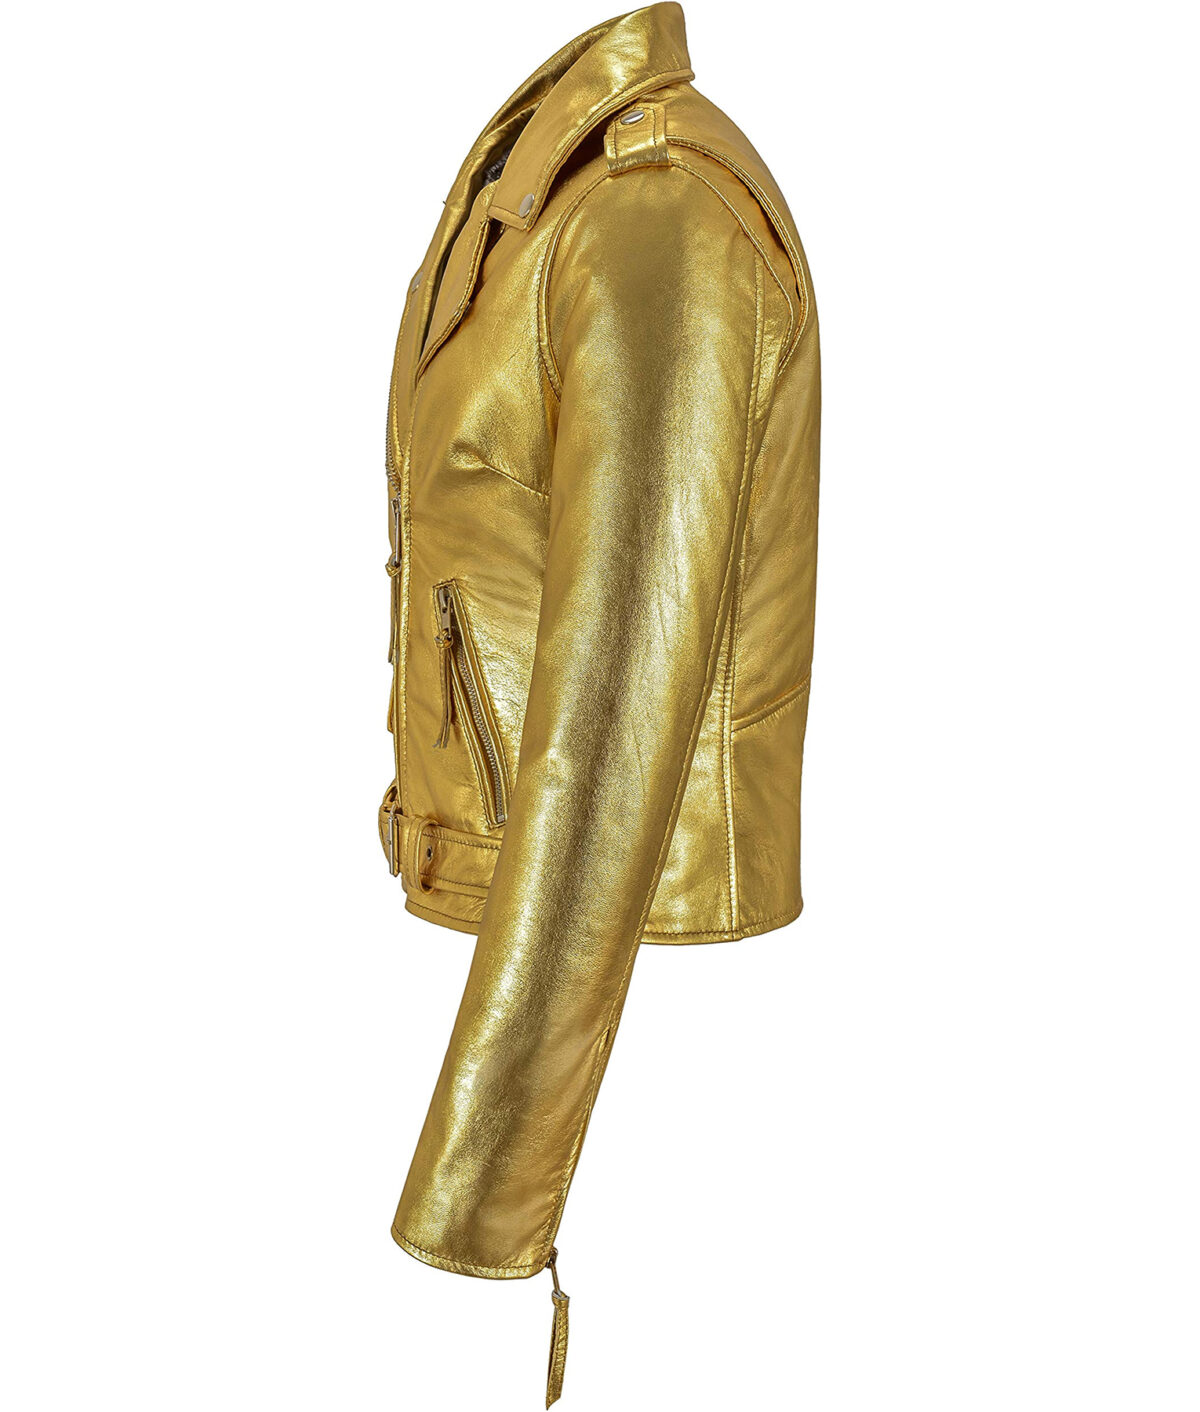 Jessica Womens Gold Metallic Leather Biker Jacket